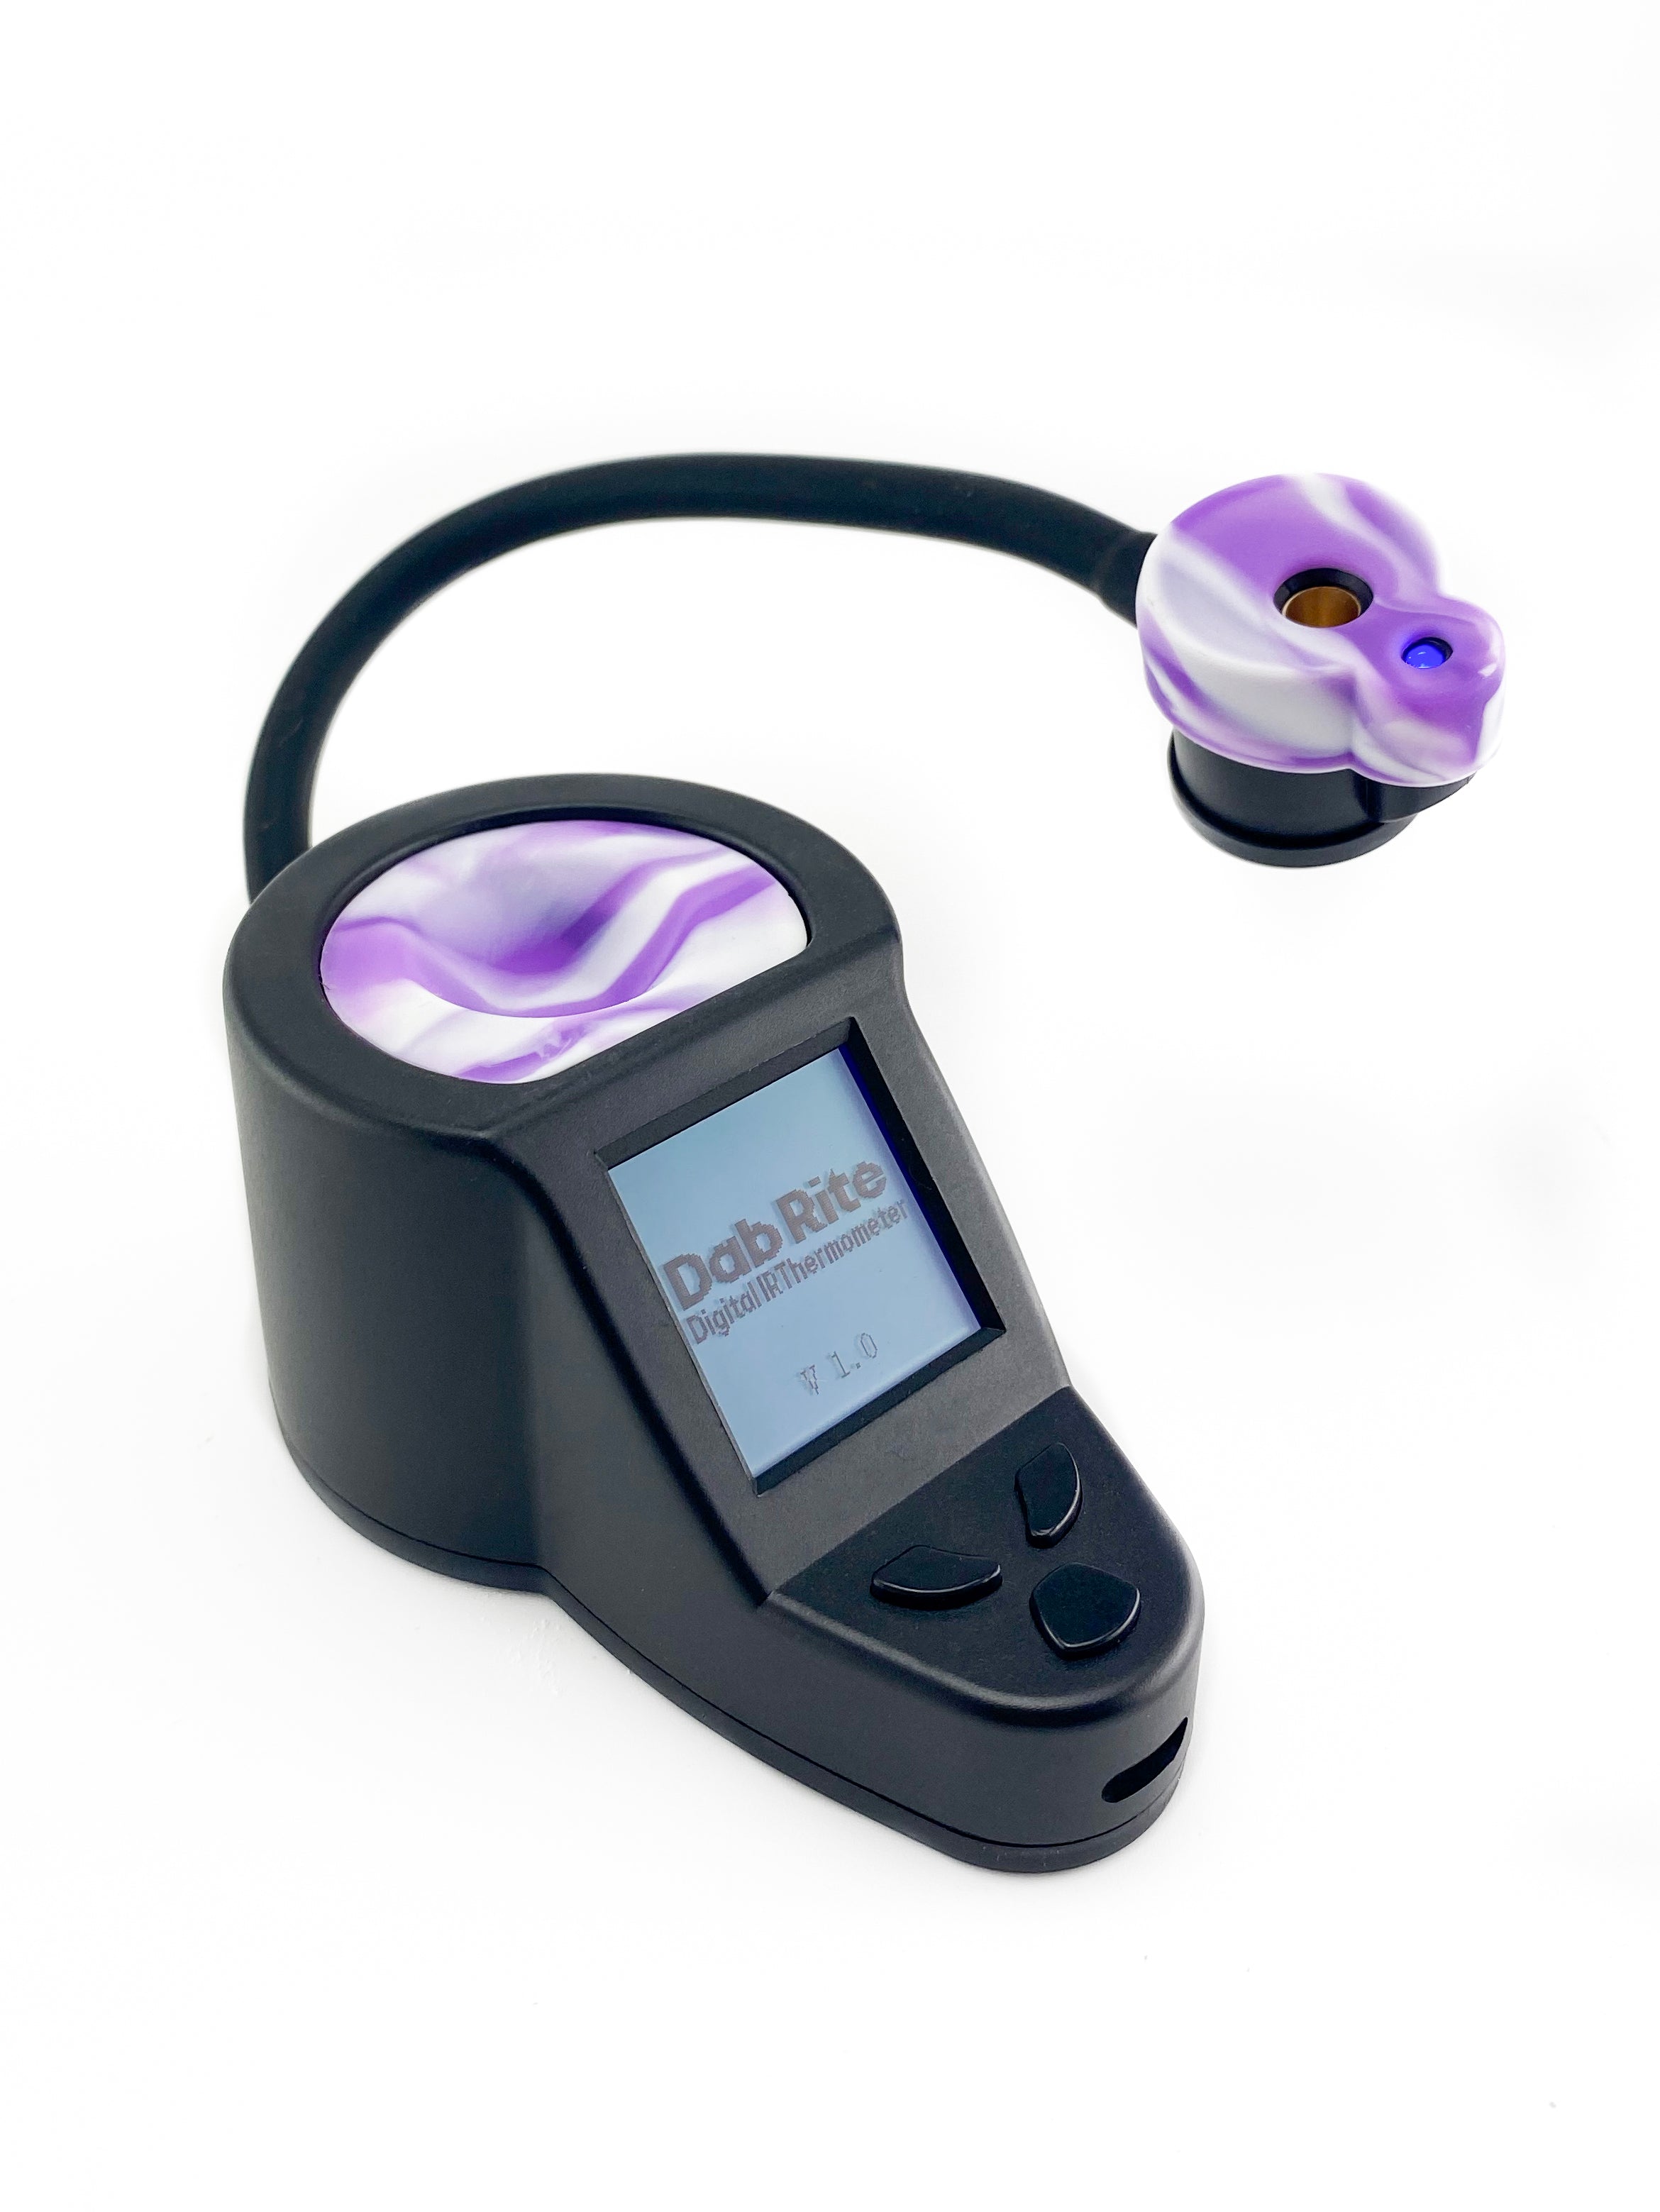 Dab Rite™ Digital IR Thermometer - Purple Swirl - KLOUD9